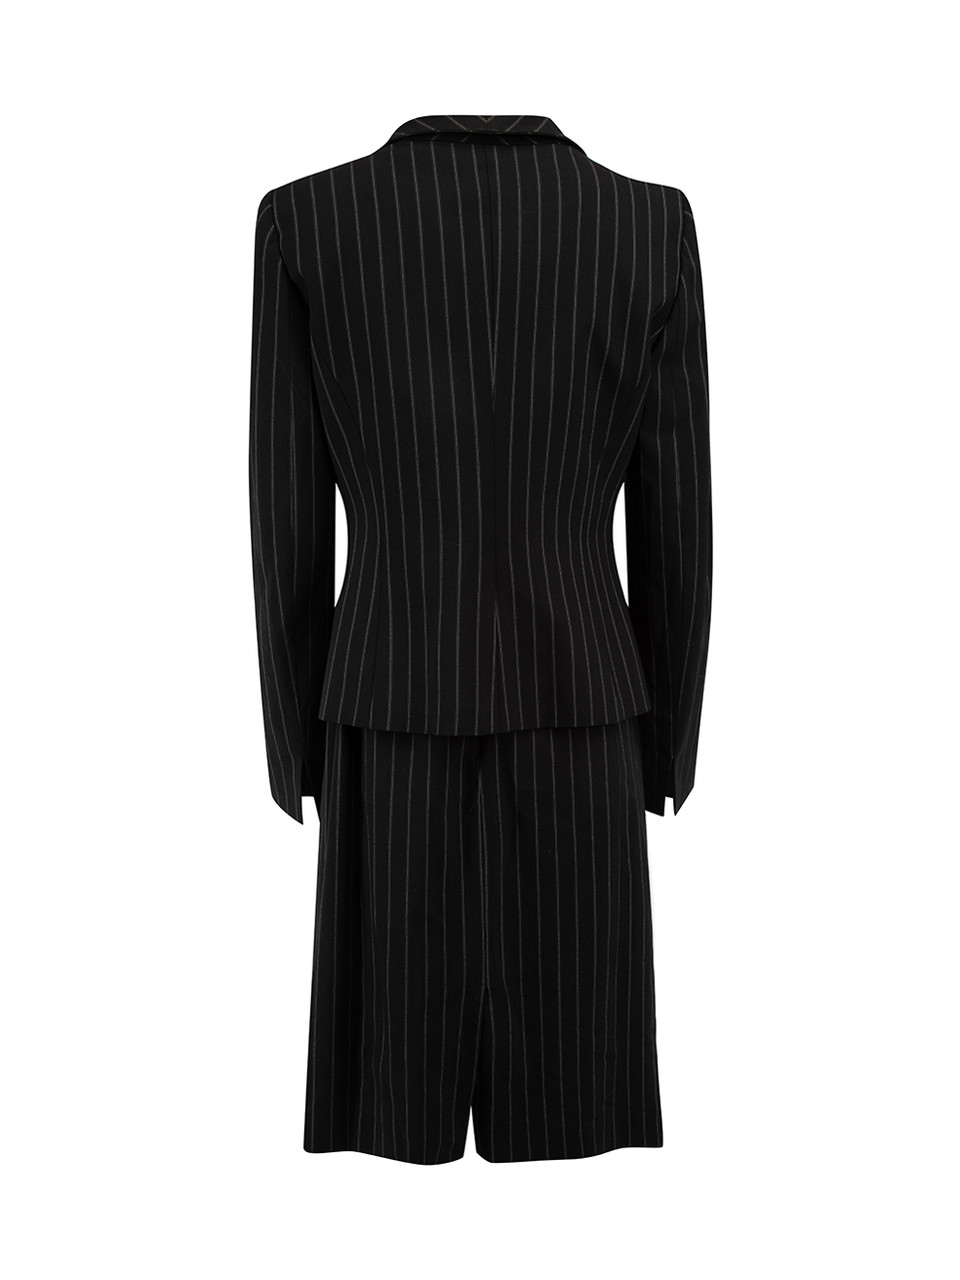 Armani Collezioni Black Pinstripe Dress and Blazer Suit